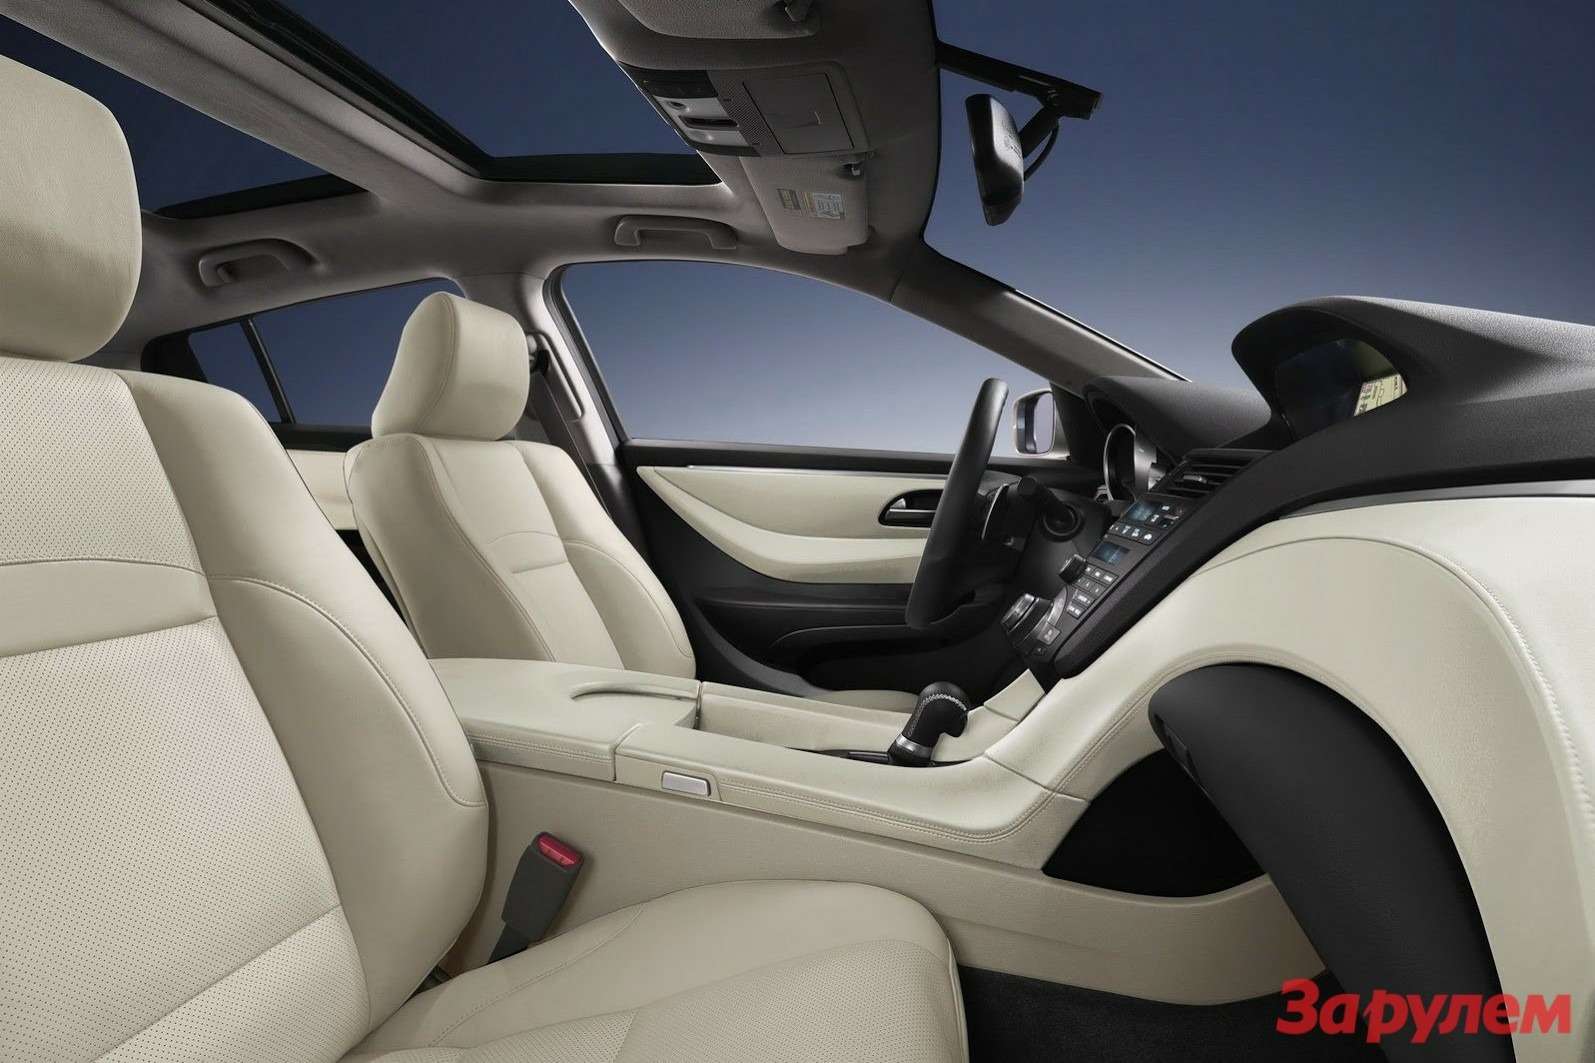 2013 Acura ZDX inside